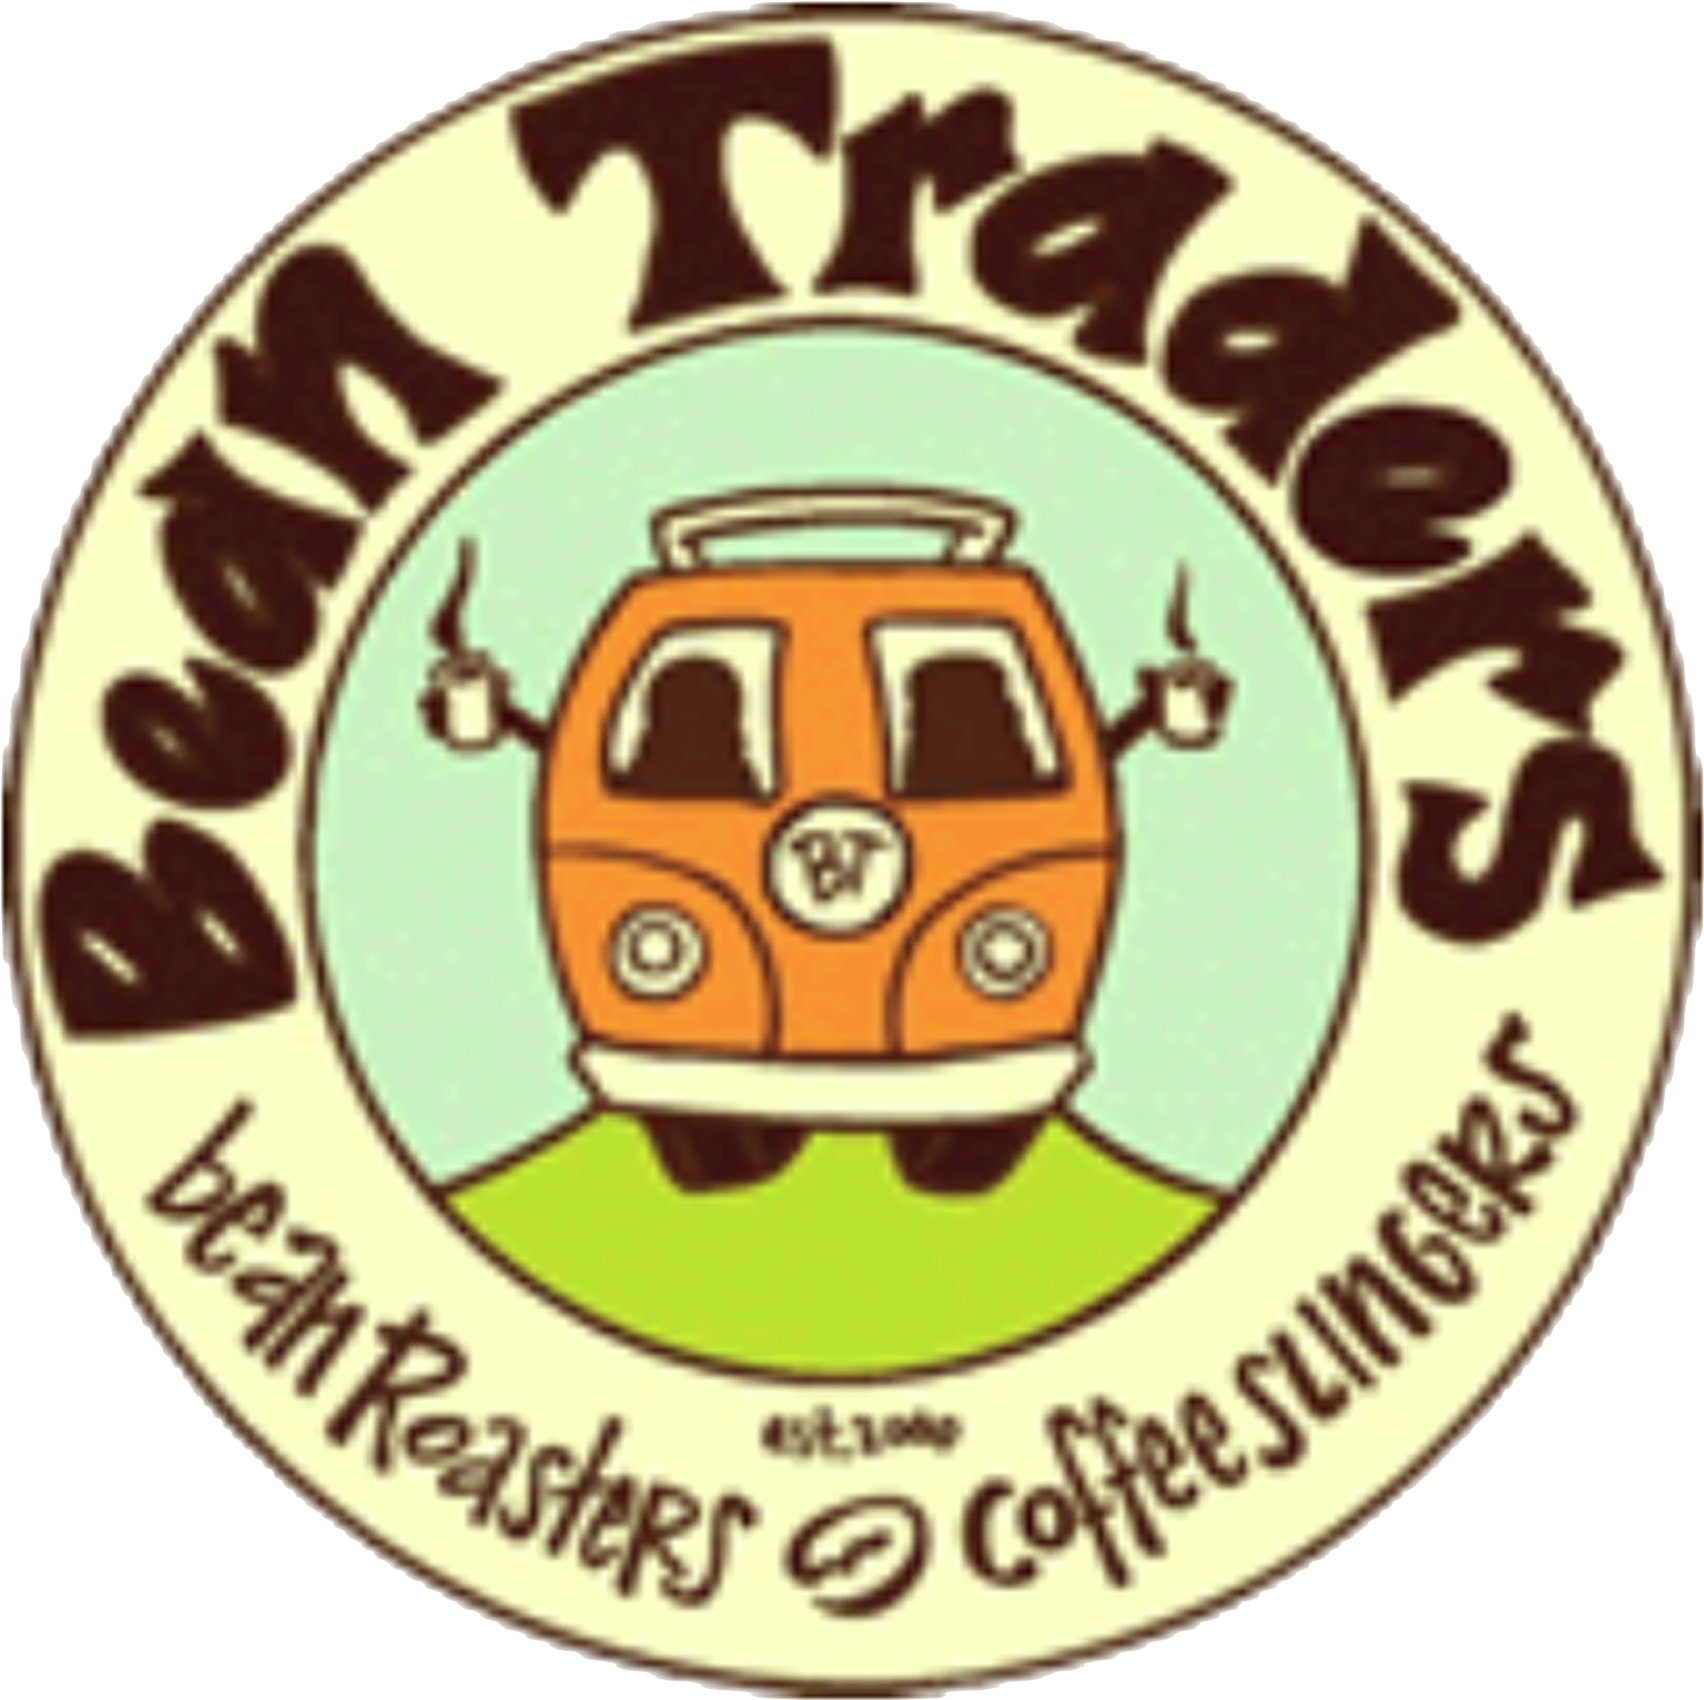 Sponsors - Bean Traders Durham (1721x1721)